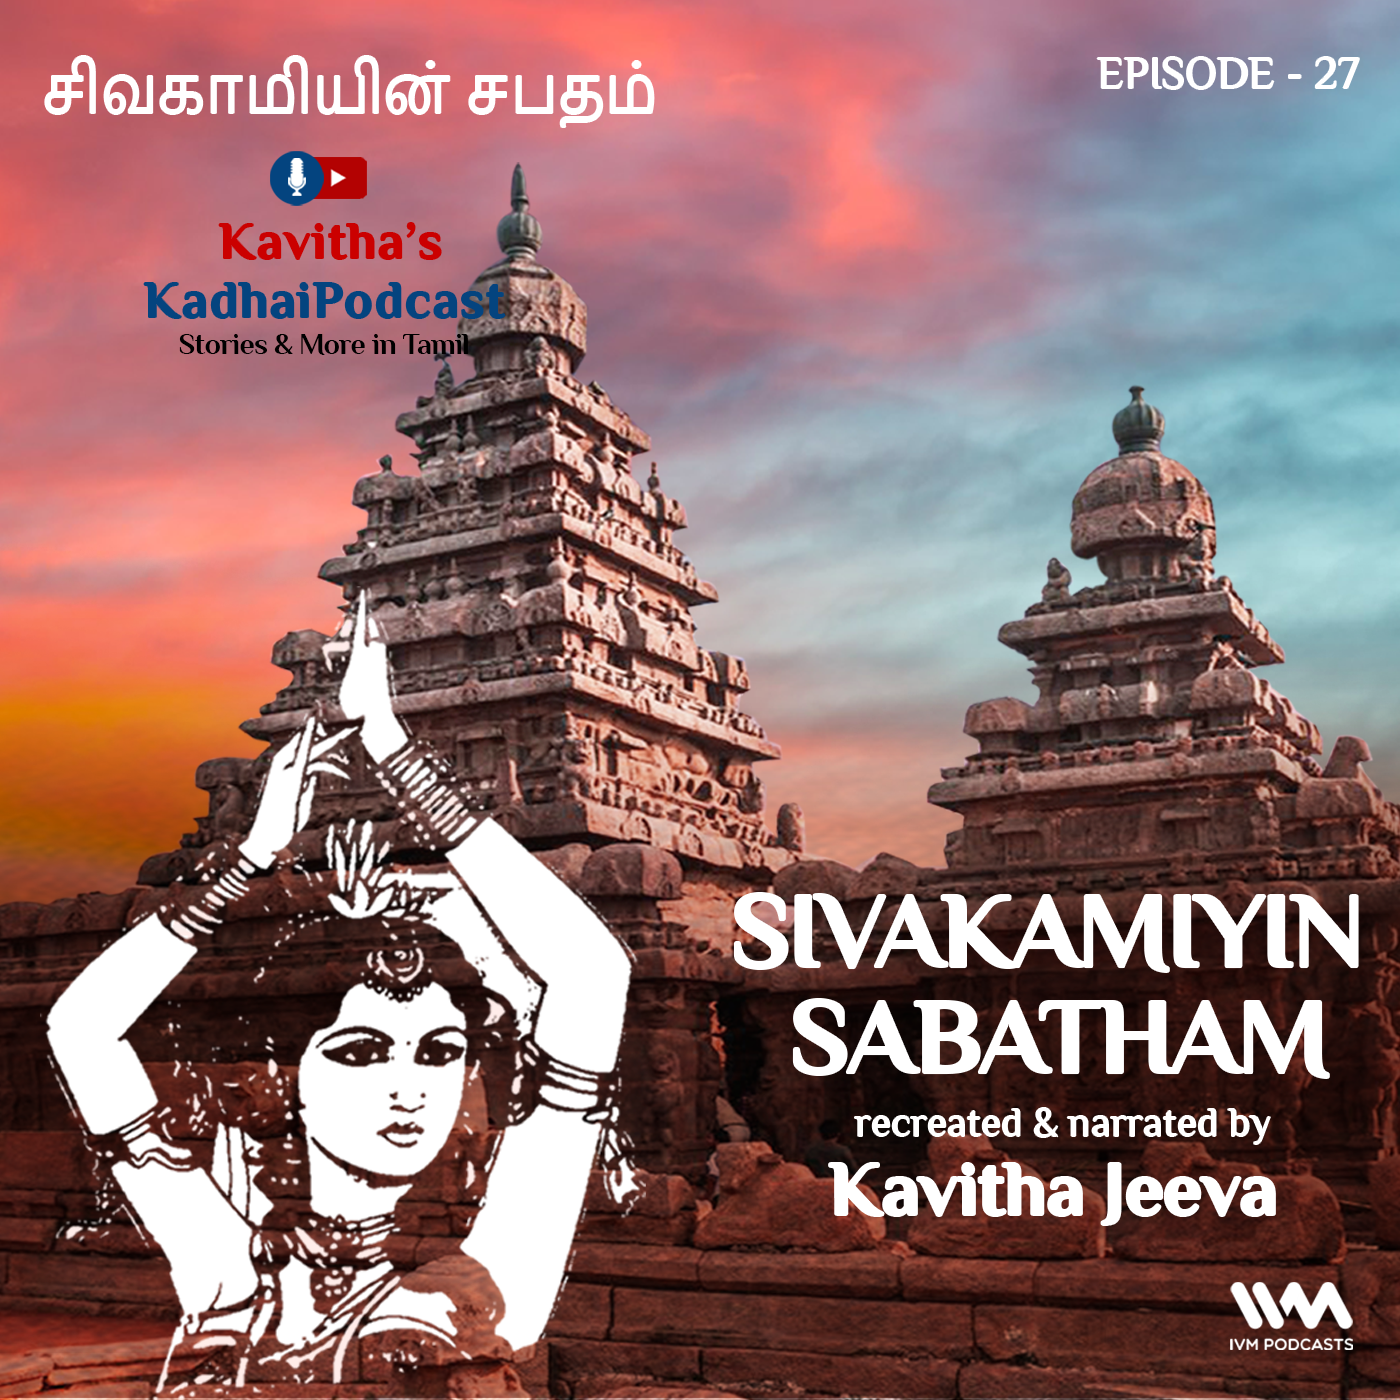 KadhaiPodcast’s Sivakamiyin Sabatham - Episode # 27